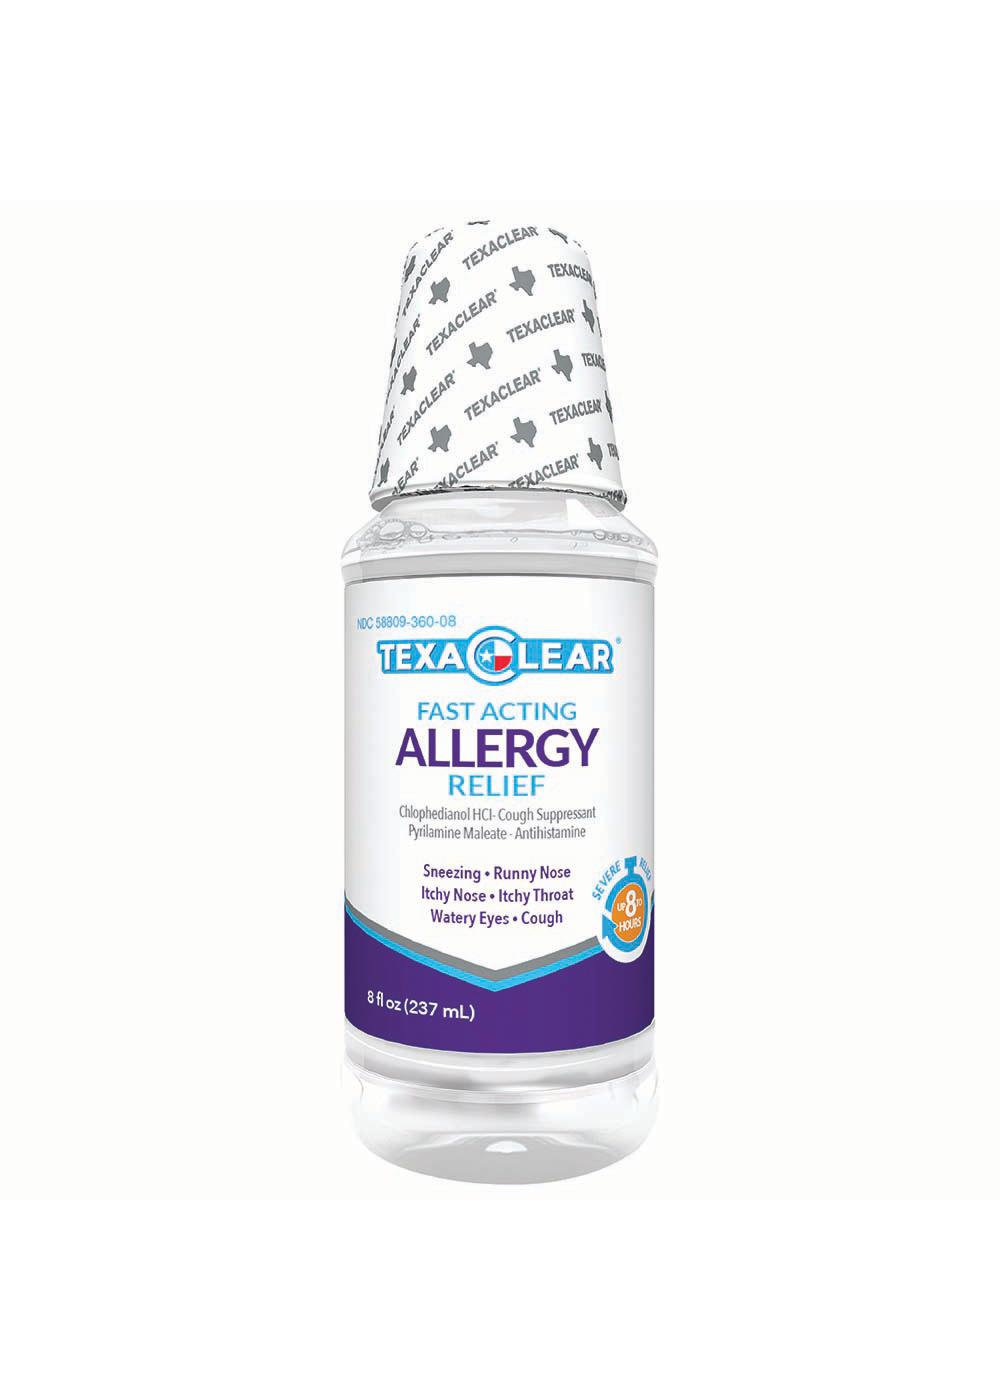 TexaClear Allergy Relief Liquid; image 1 of 6